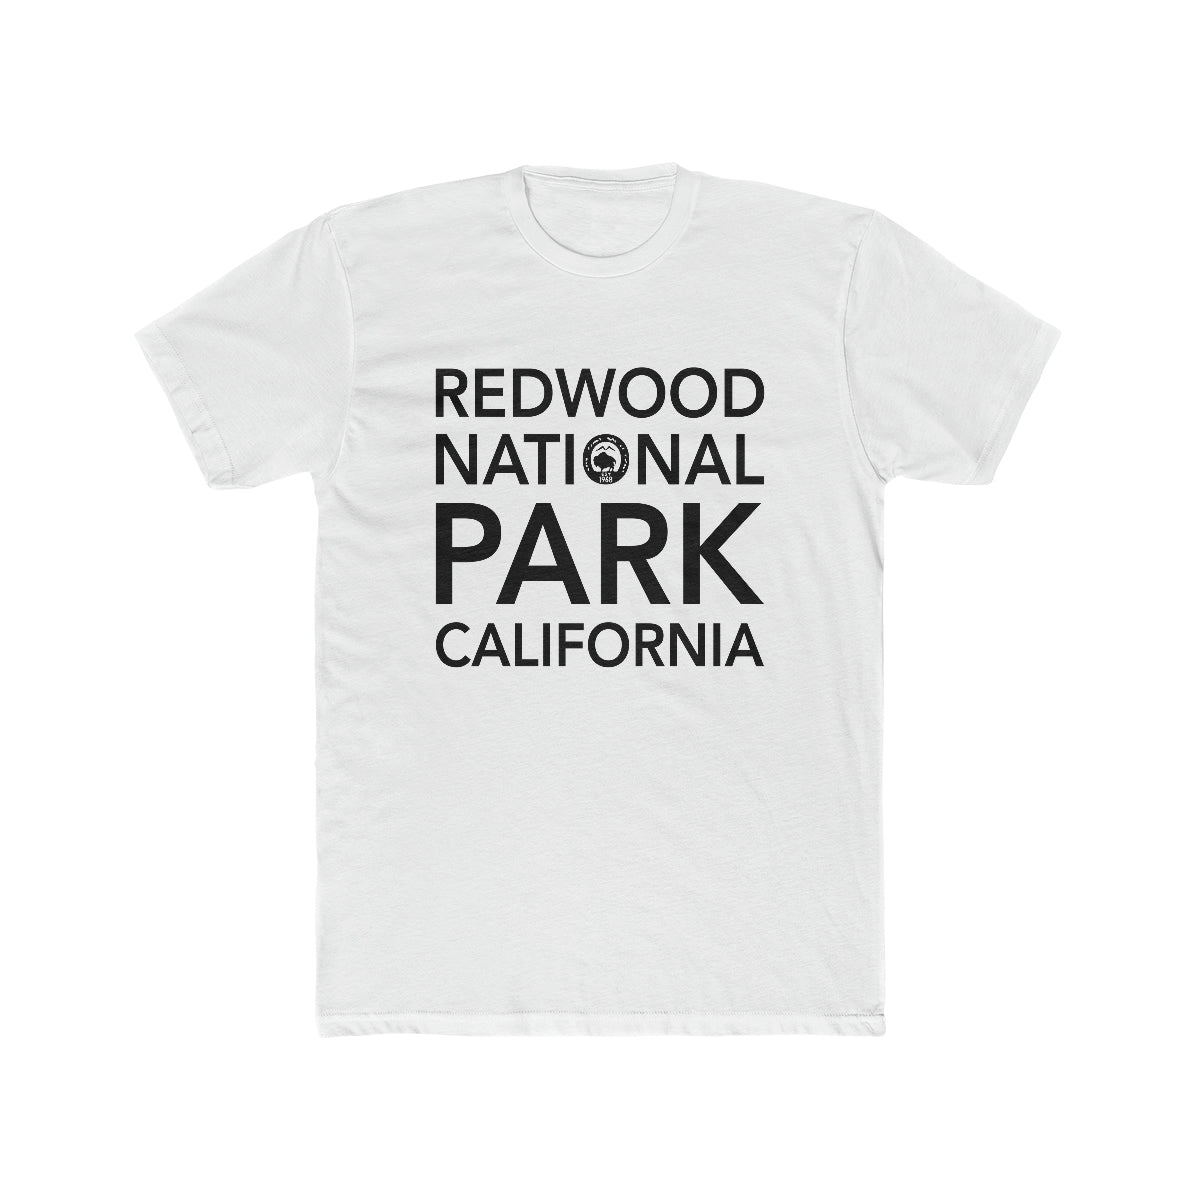 Redwood National Park T-Shirt Block Text